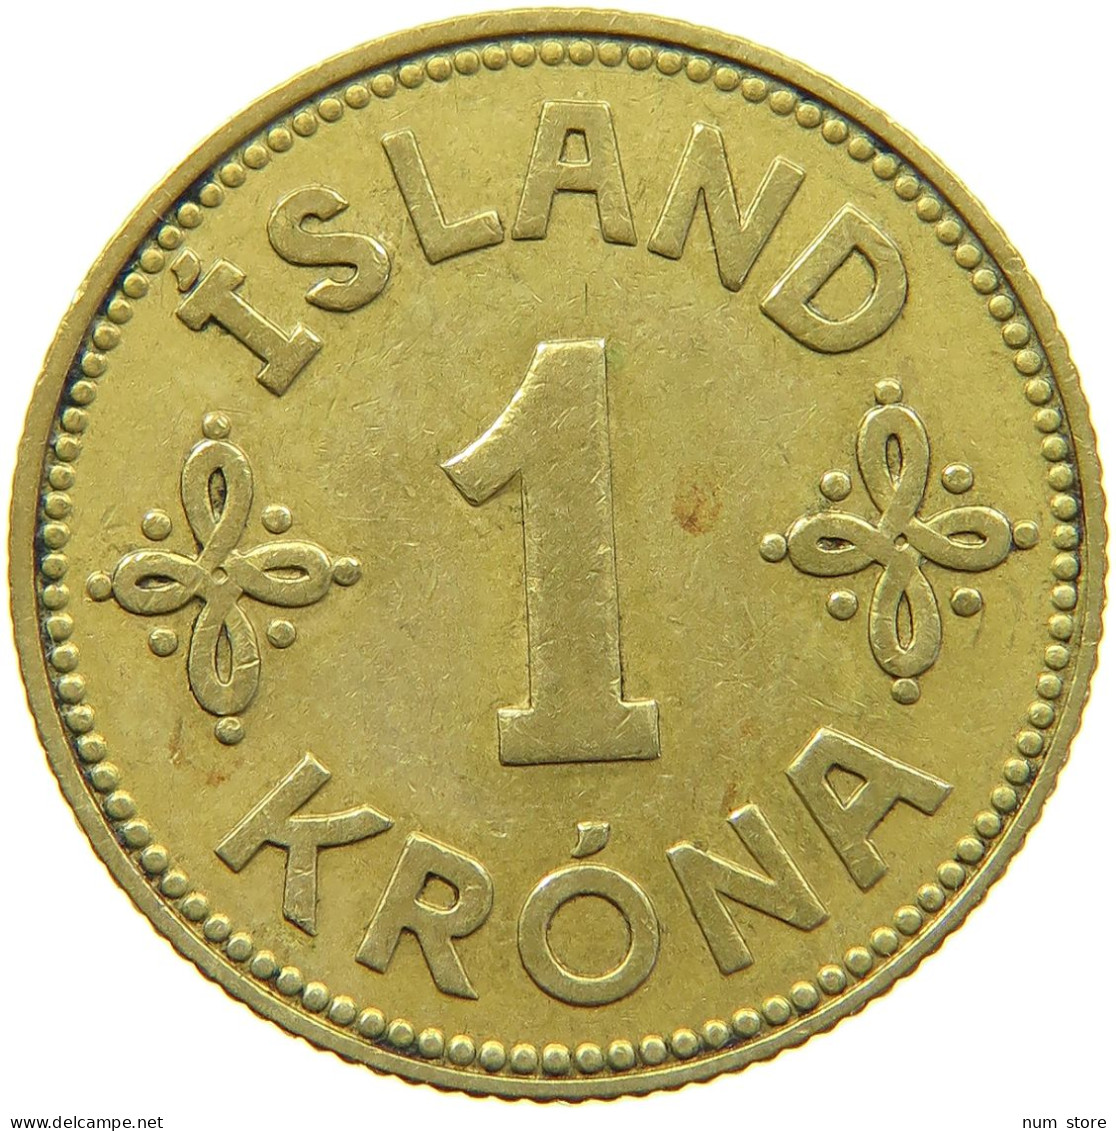 ICELAND KRONA 1940  #MA 064705 - Islande